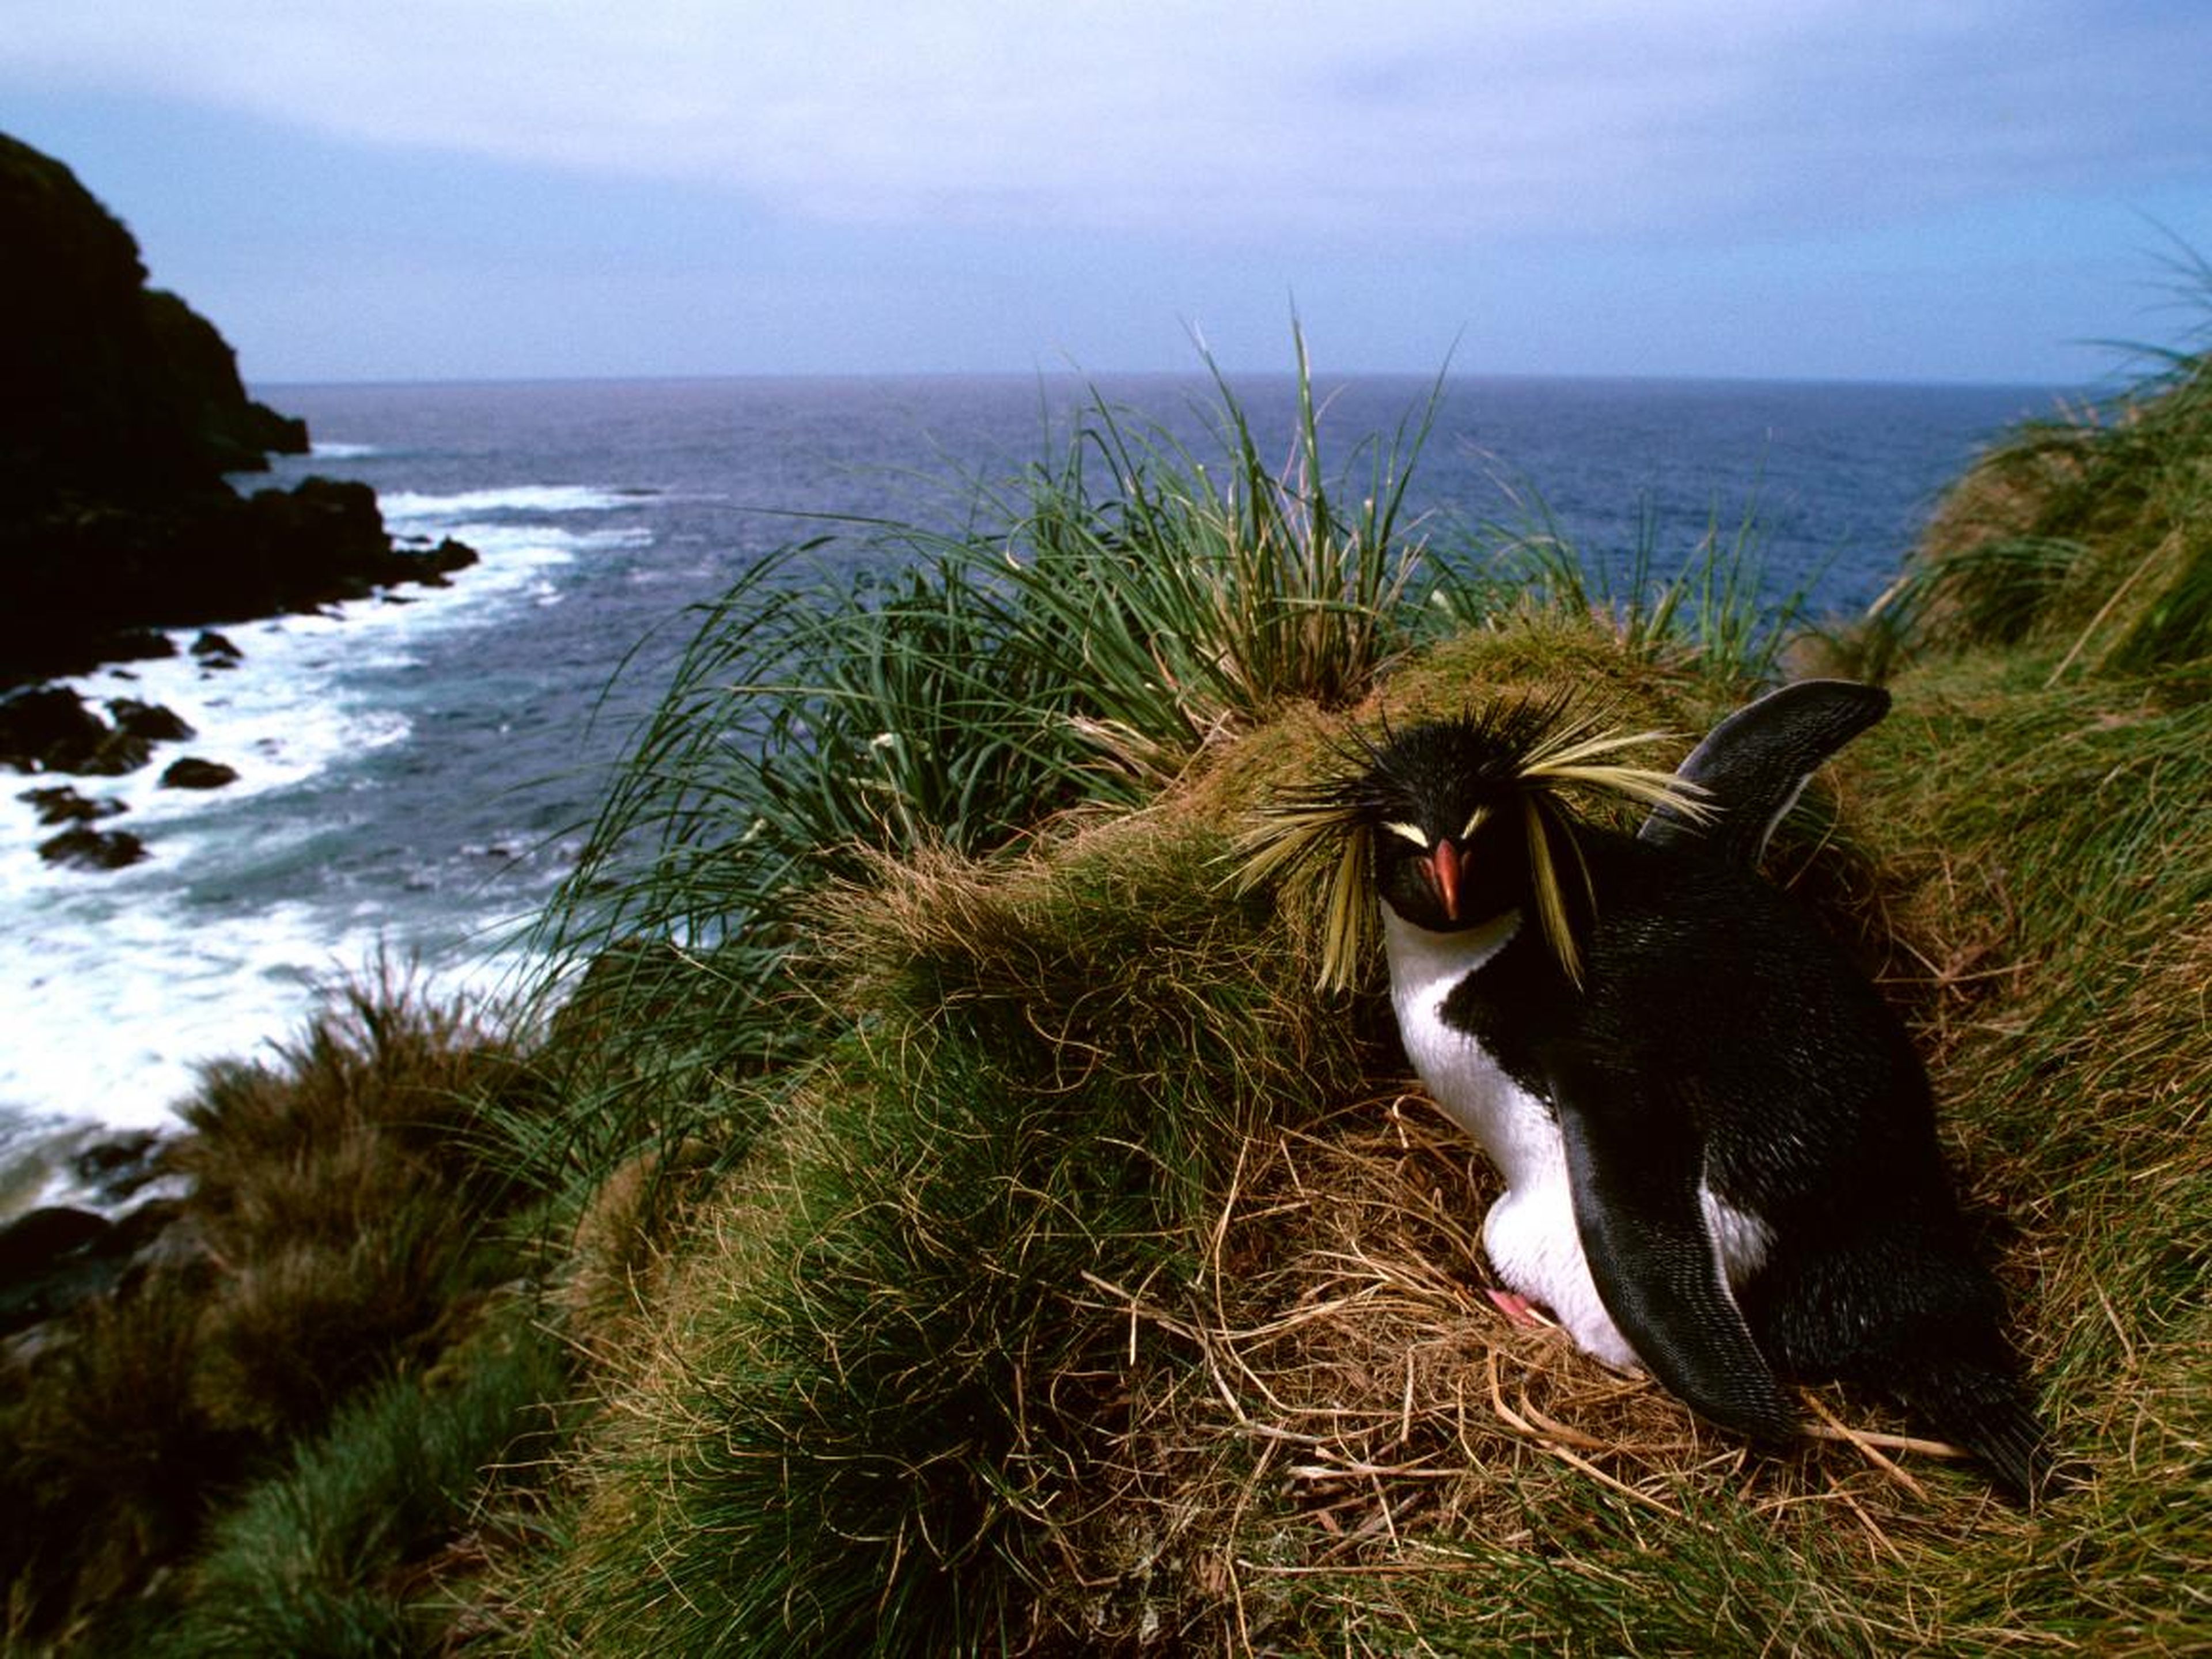 Animal life includes rare bird breeds and rockhopper penguins.